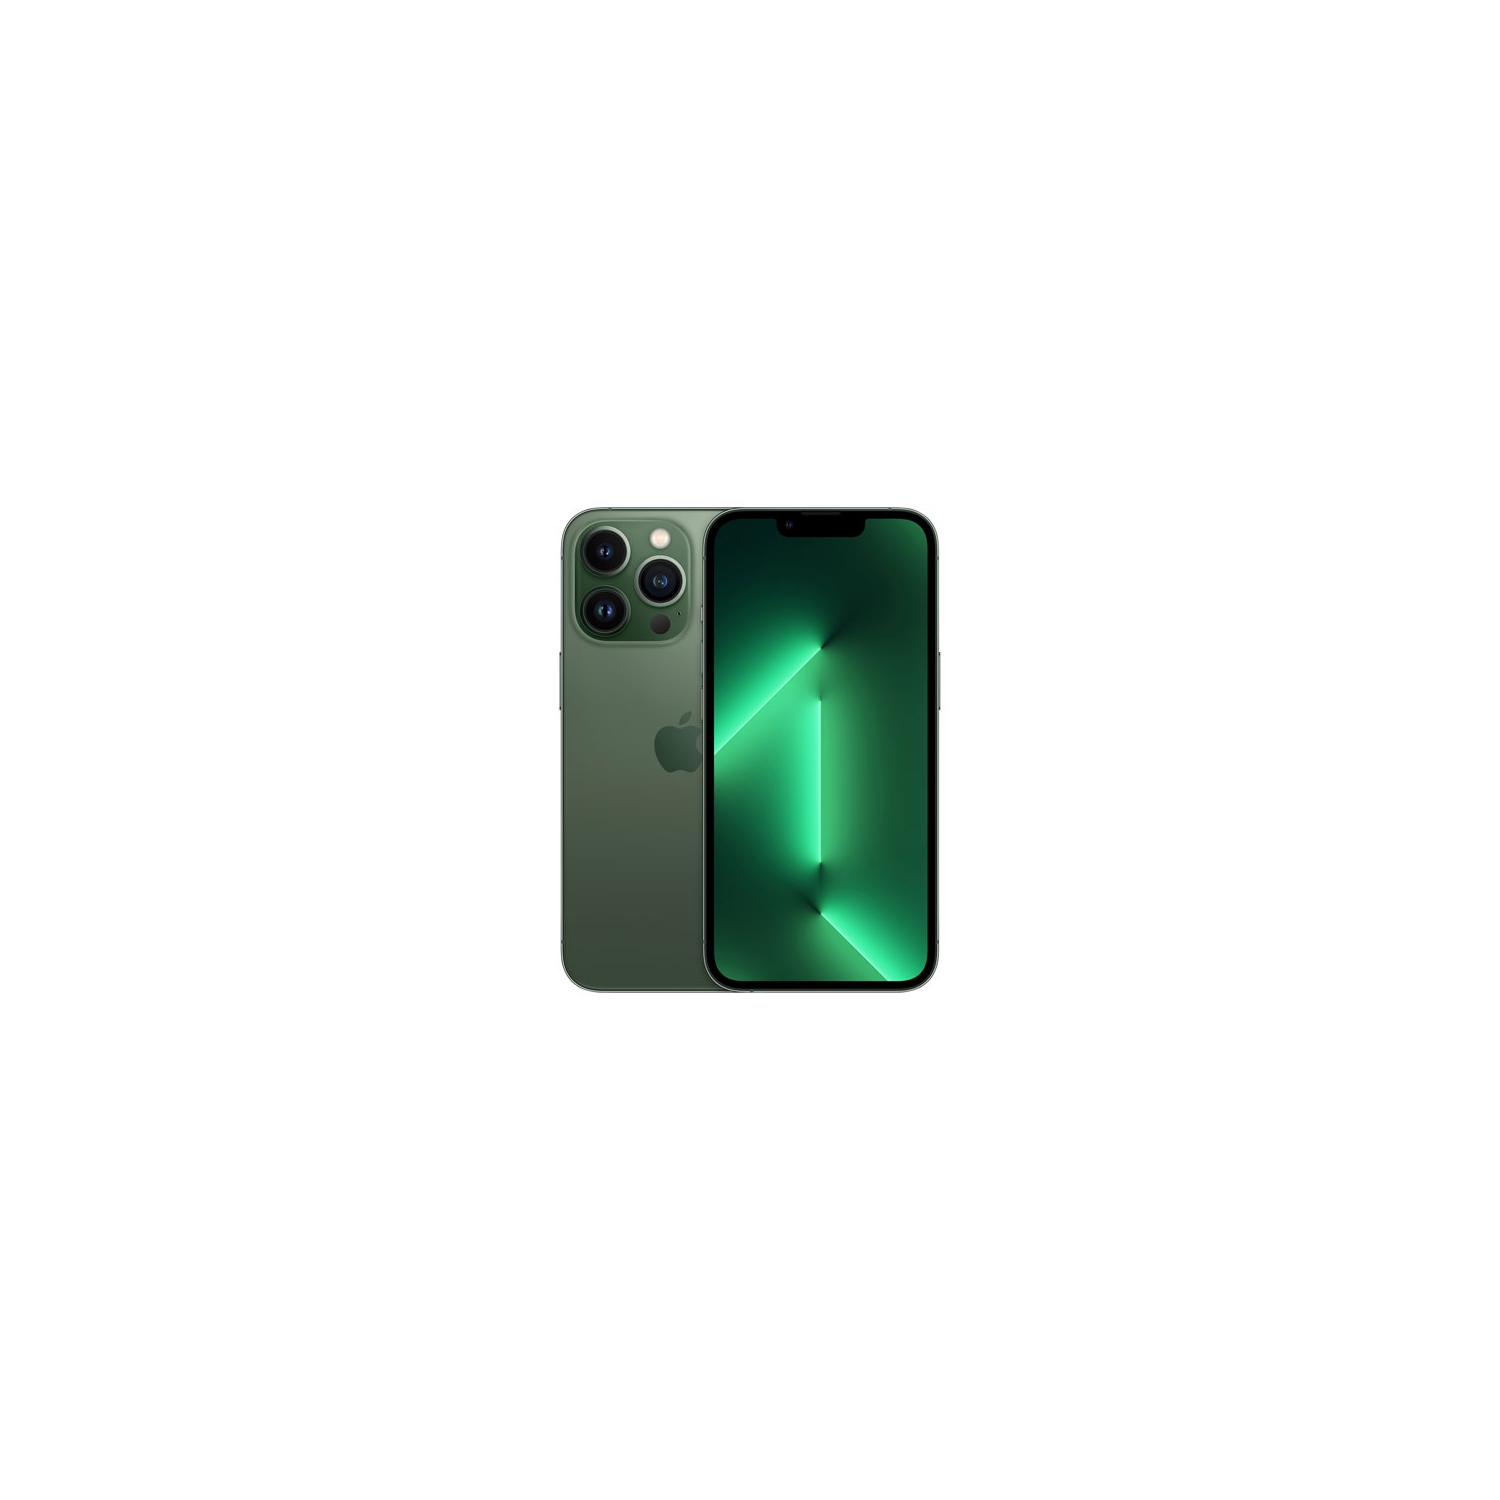 Apple iPhone 13 Pro Max 256GB - Alpine Green - Unlocked - Open Box